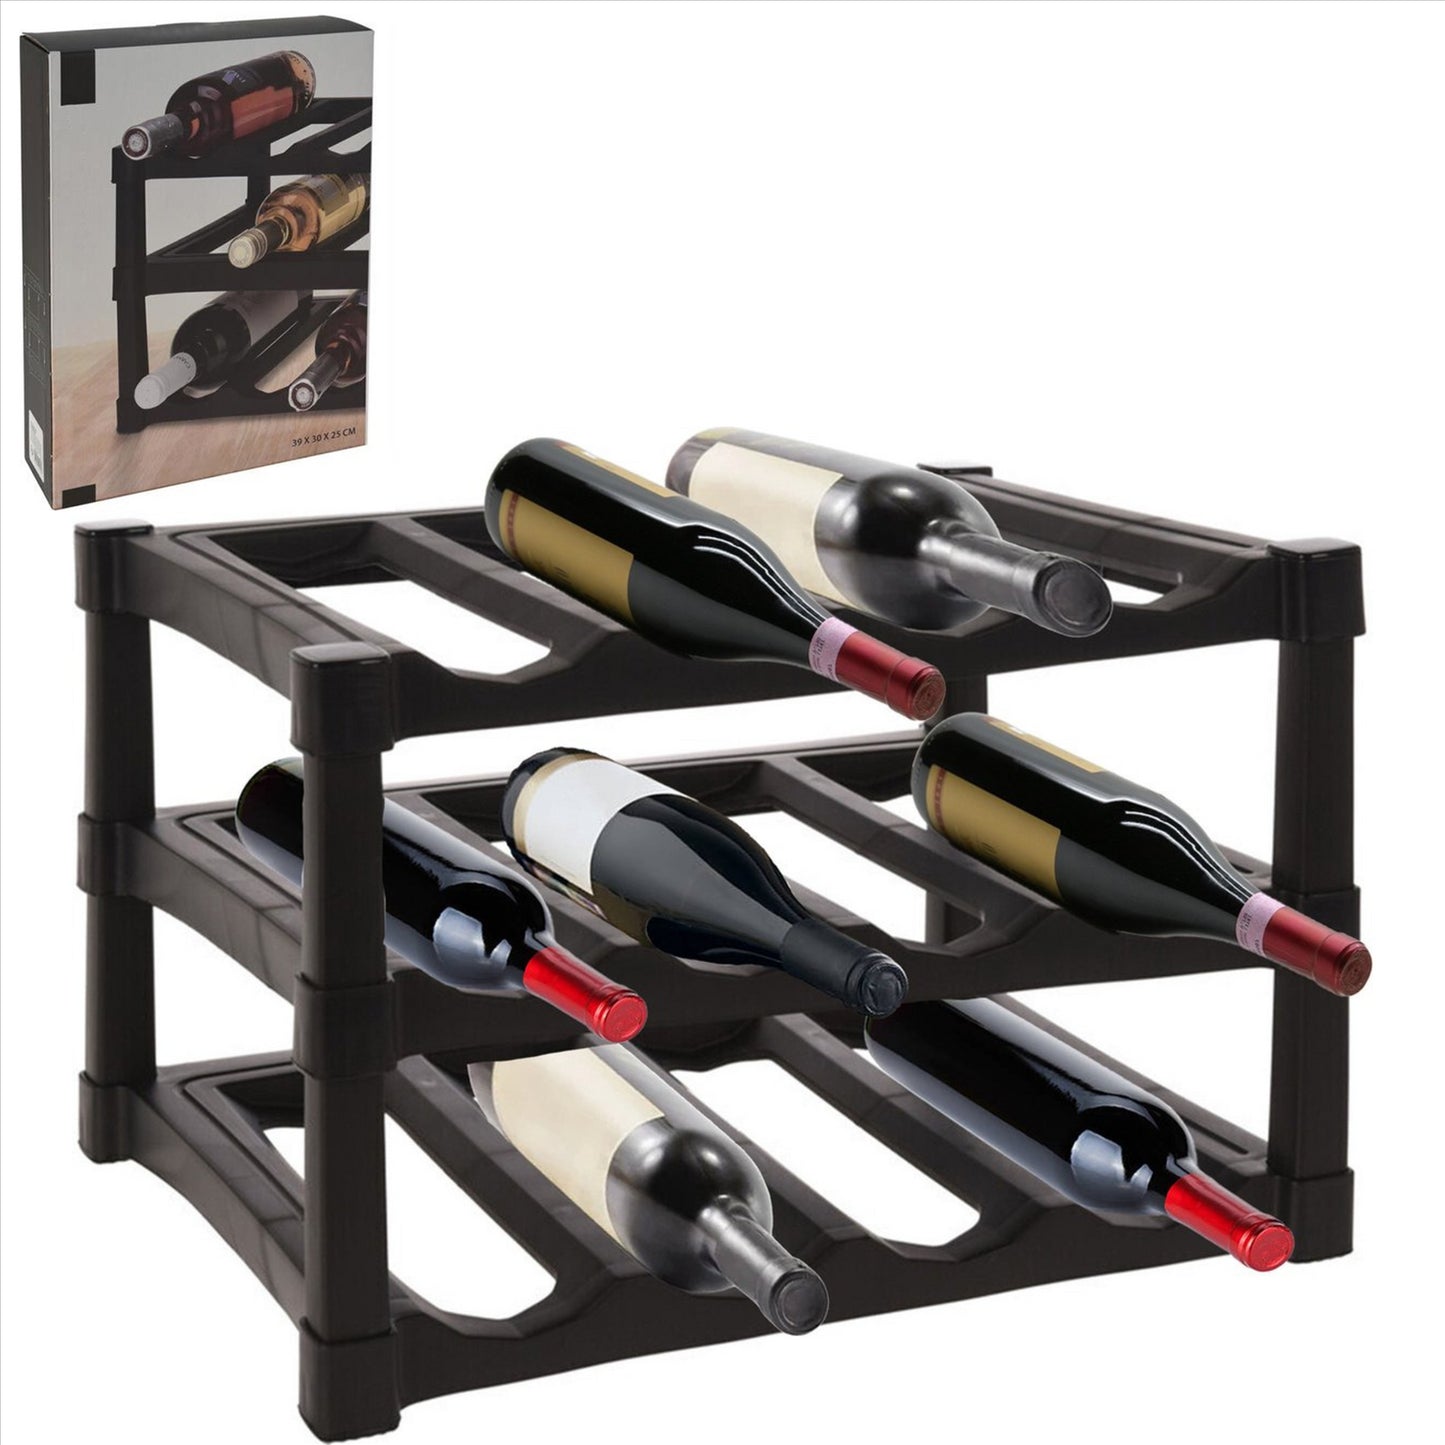 3 Tier Stackable 12 Bottle Wine Storage Rack by Geezy - UKBuyZone